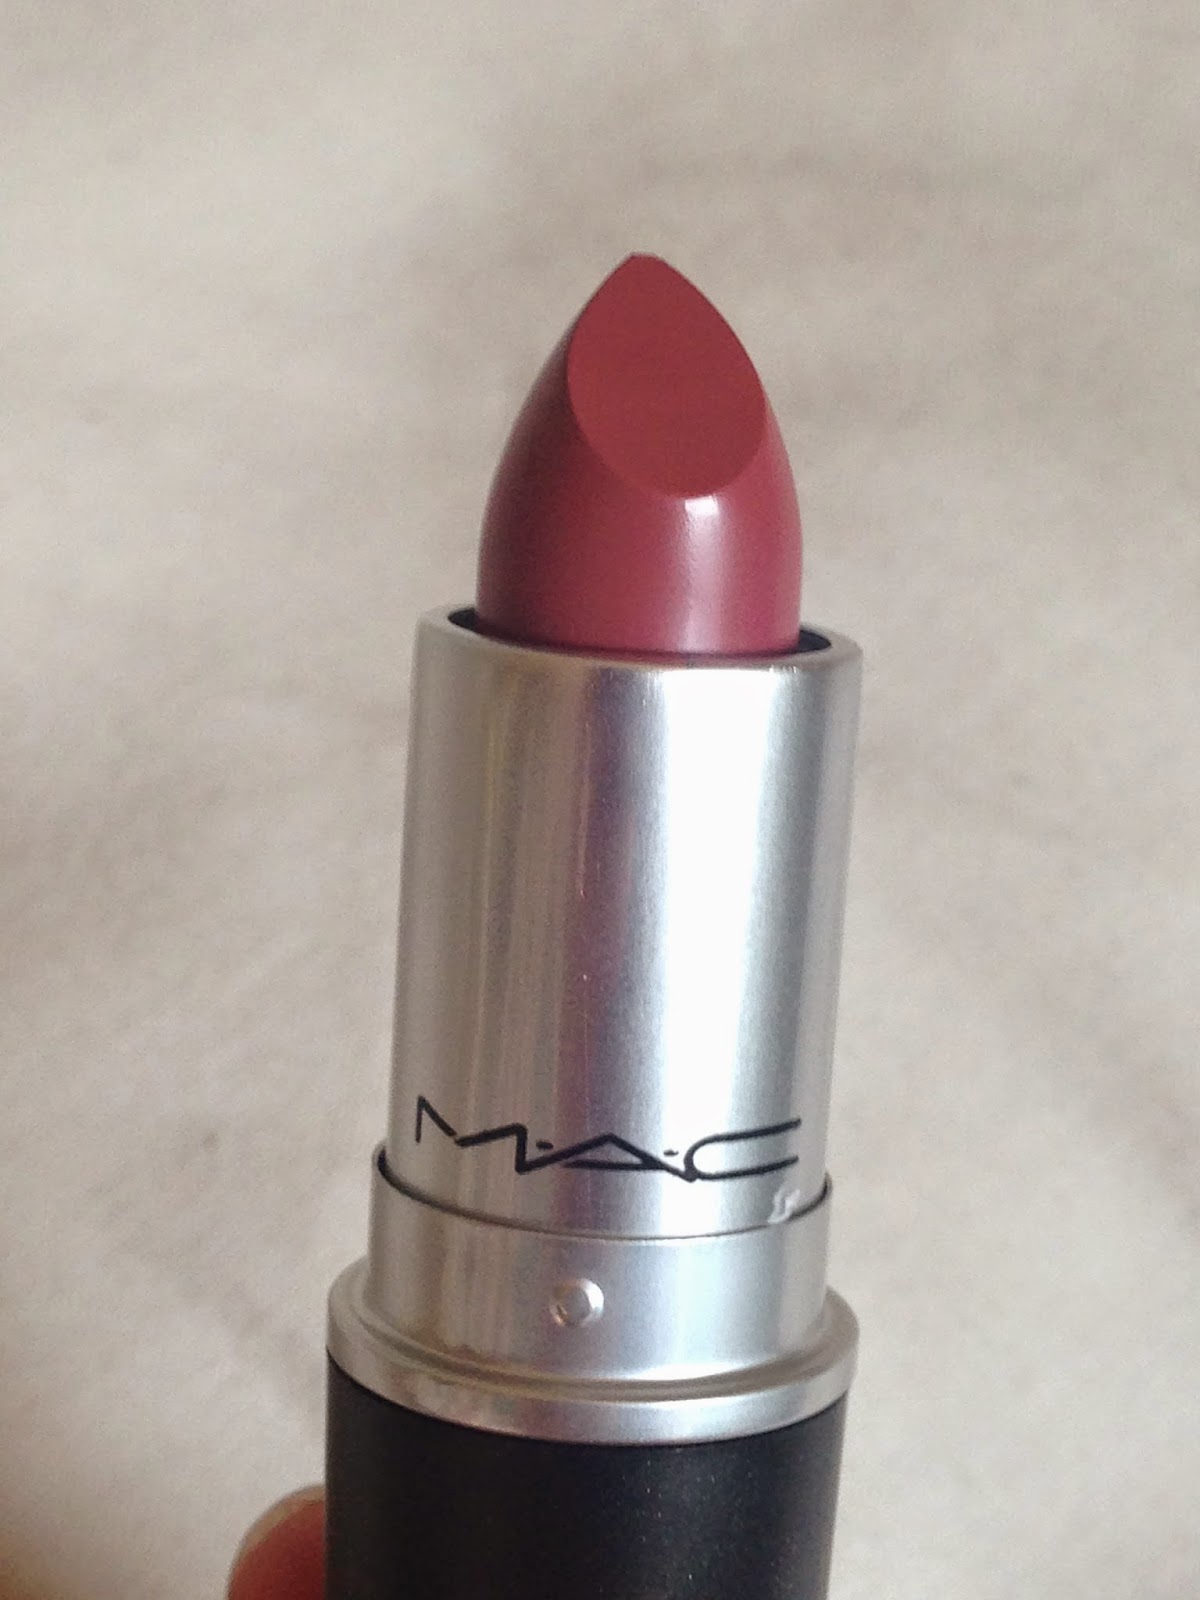 Praten tegen sap groet MAC Satin Lipstick in Twig Review | Jasmine Talks Beauty